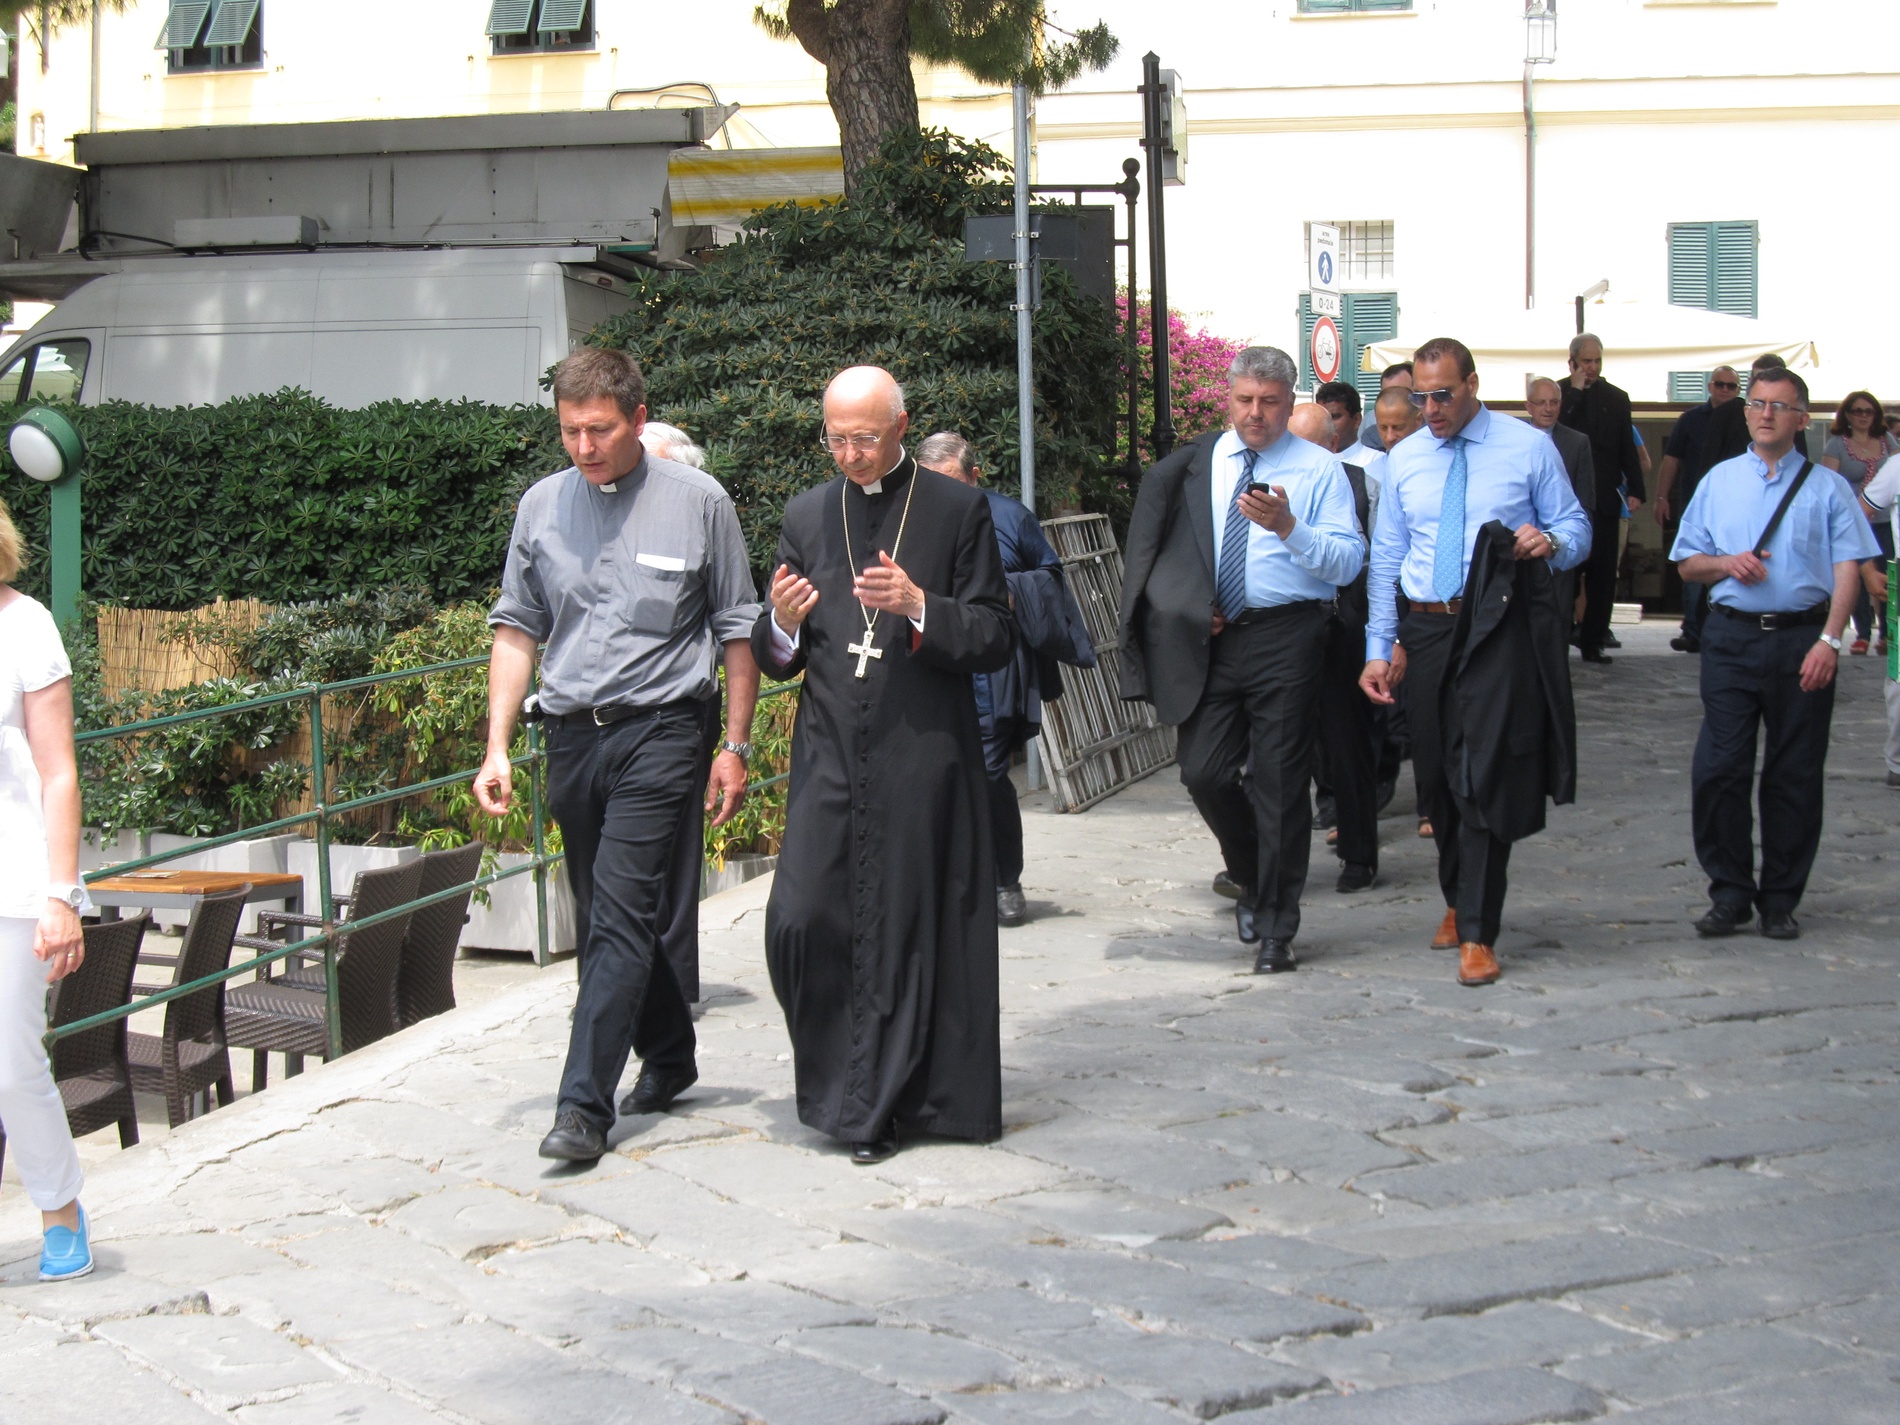 gita-clero-portovenere-lunigiana-2015-06-08-12-44-35